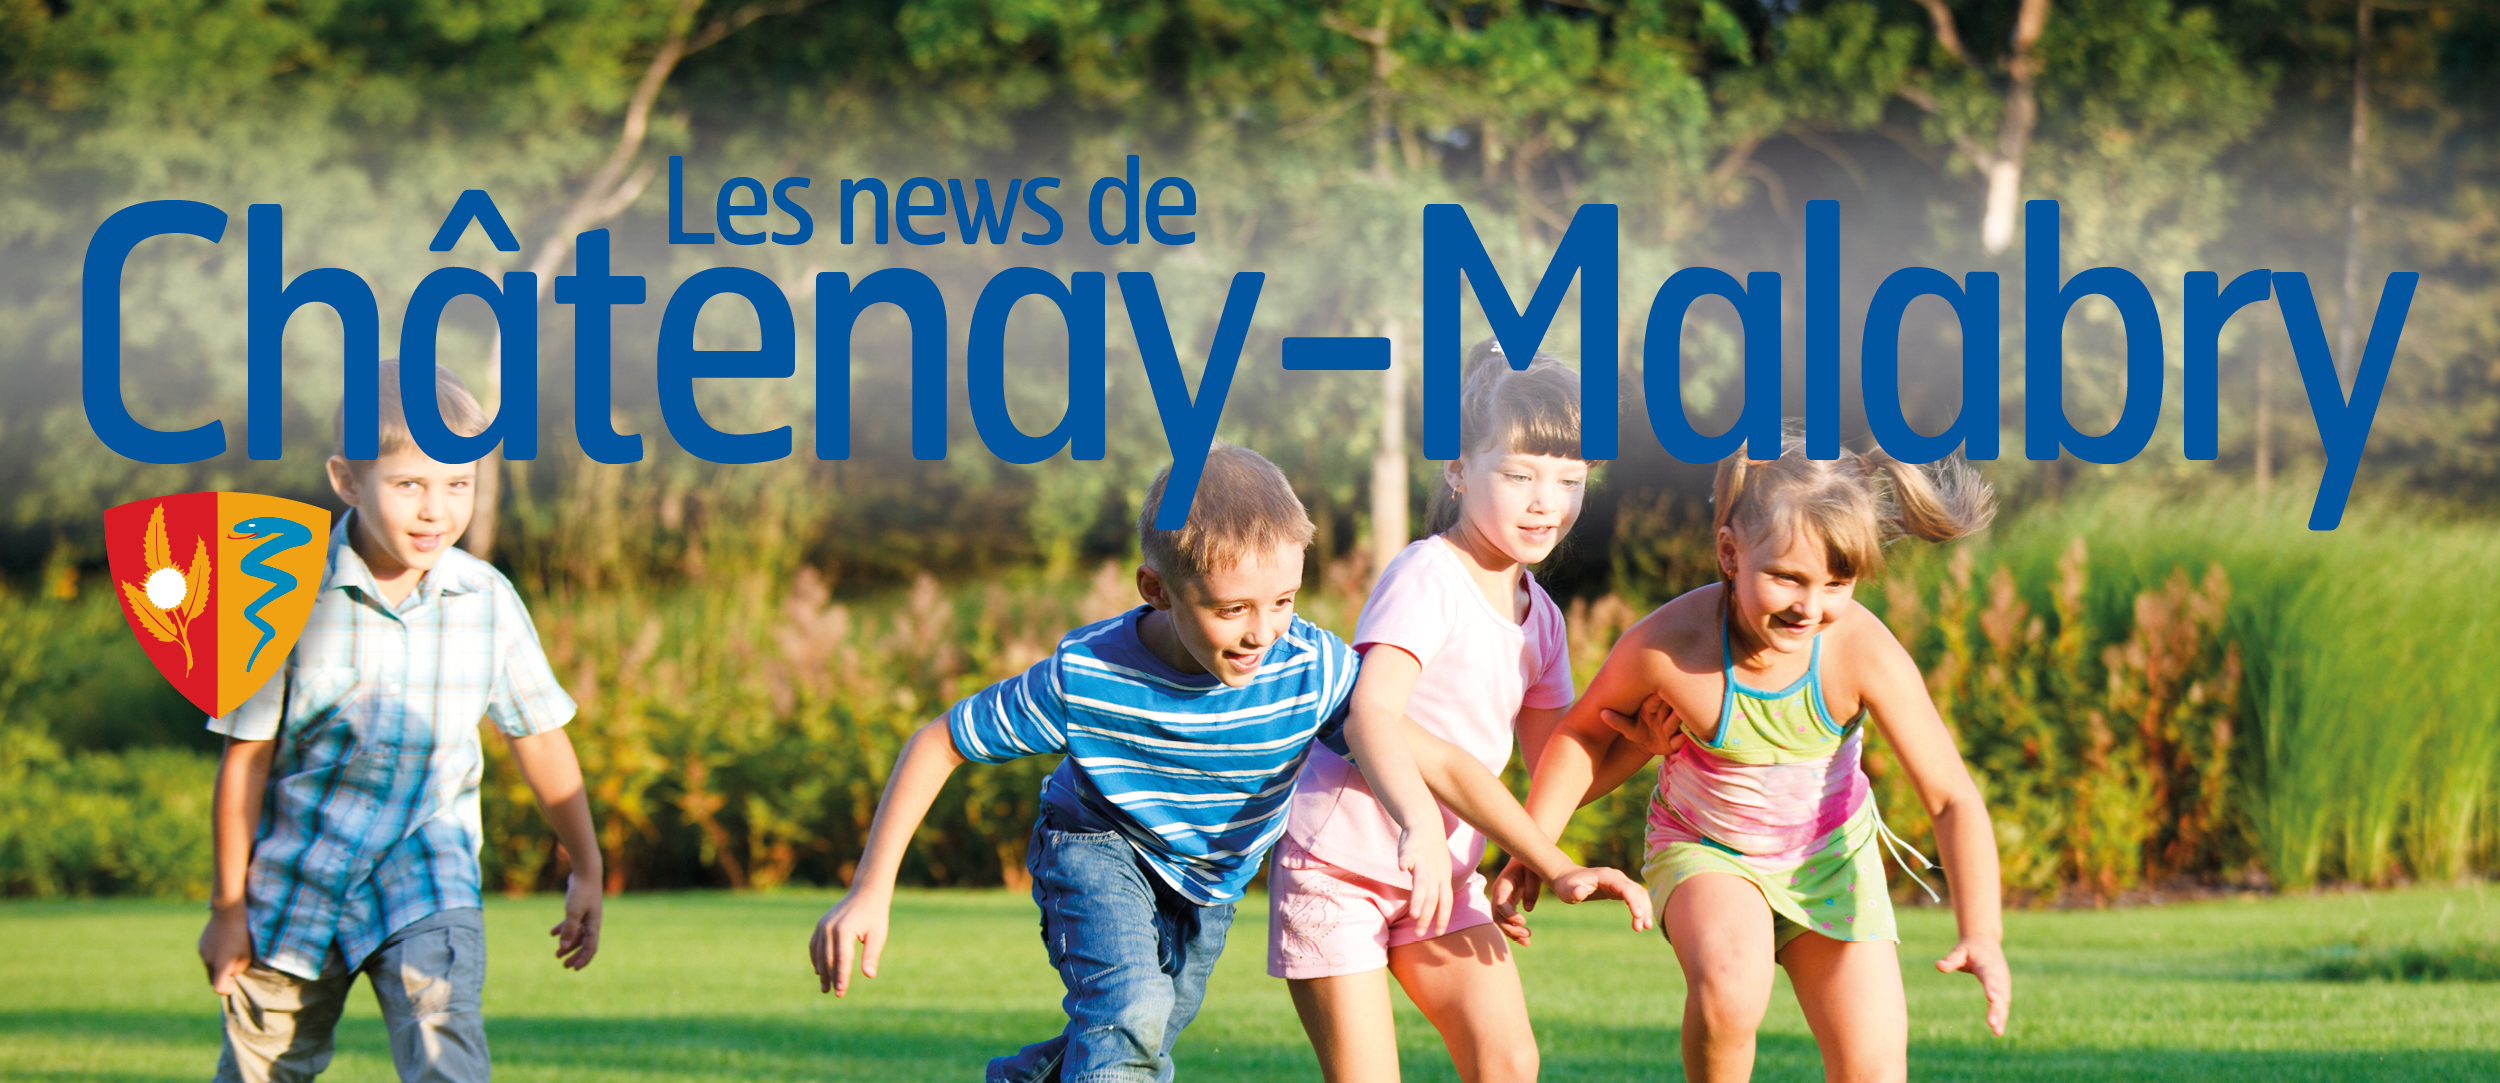 Les news de Châtenay-Malabry